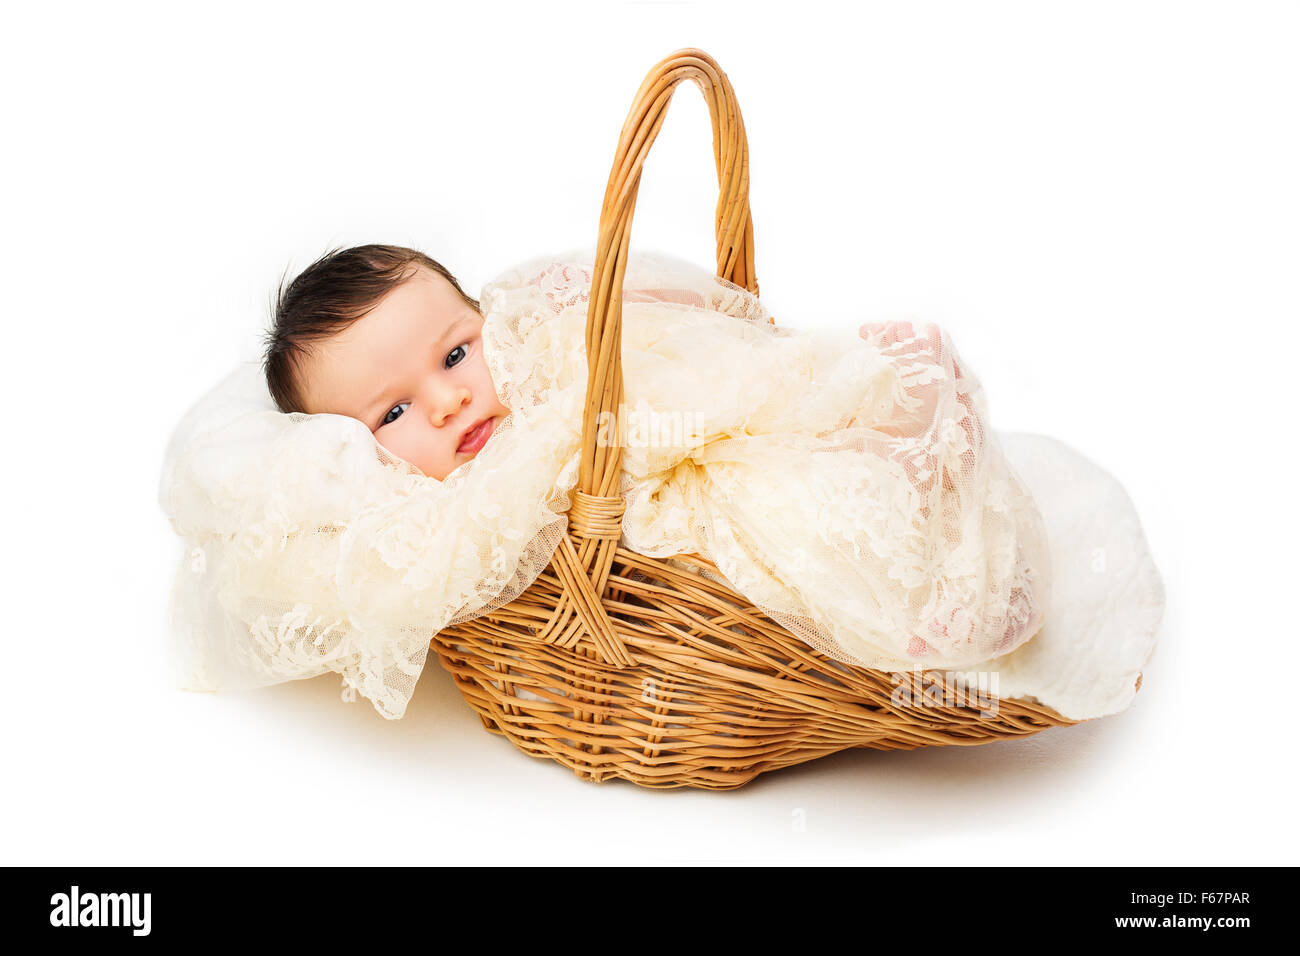 Newborn baby smiling in a wicker basket Stock Photo